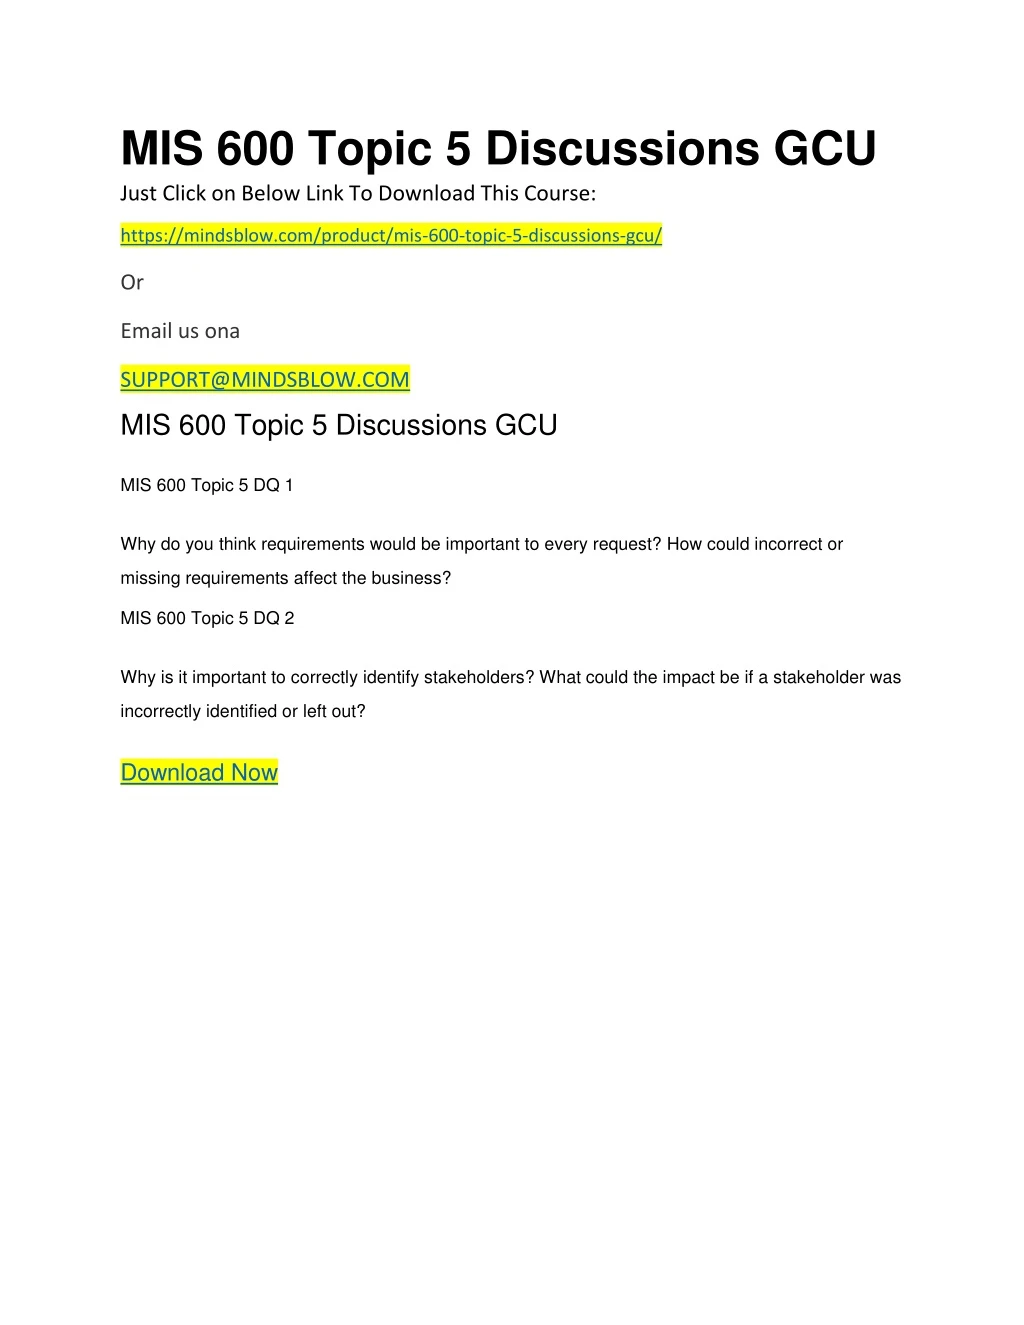 mis 600 topic 5 discussions gcu just click